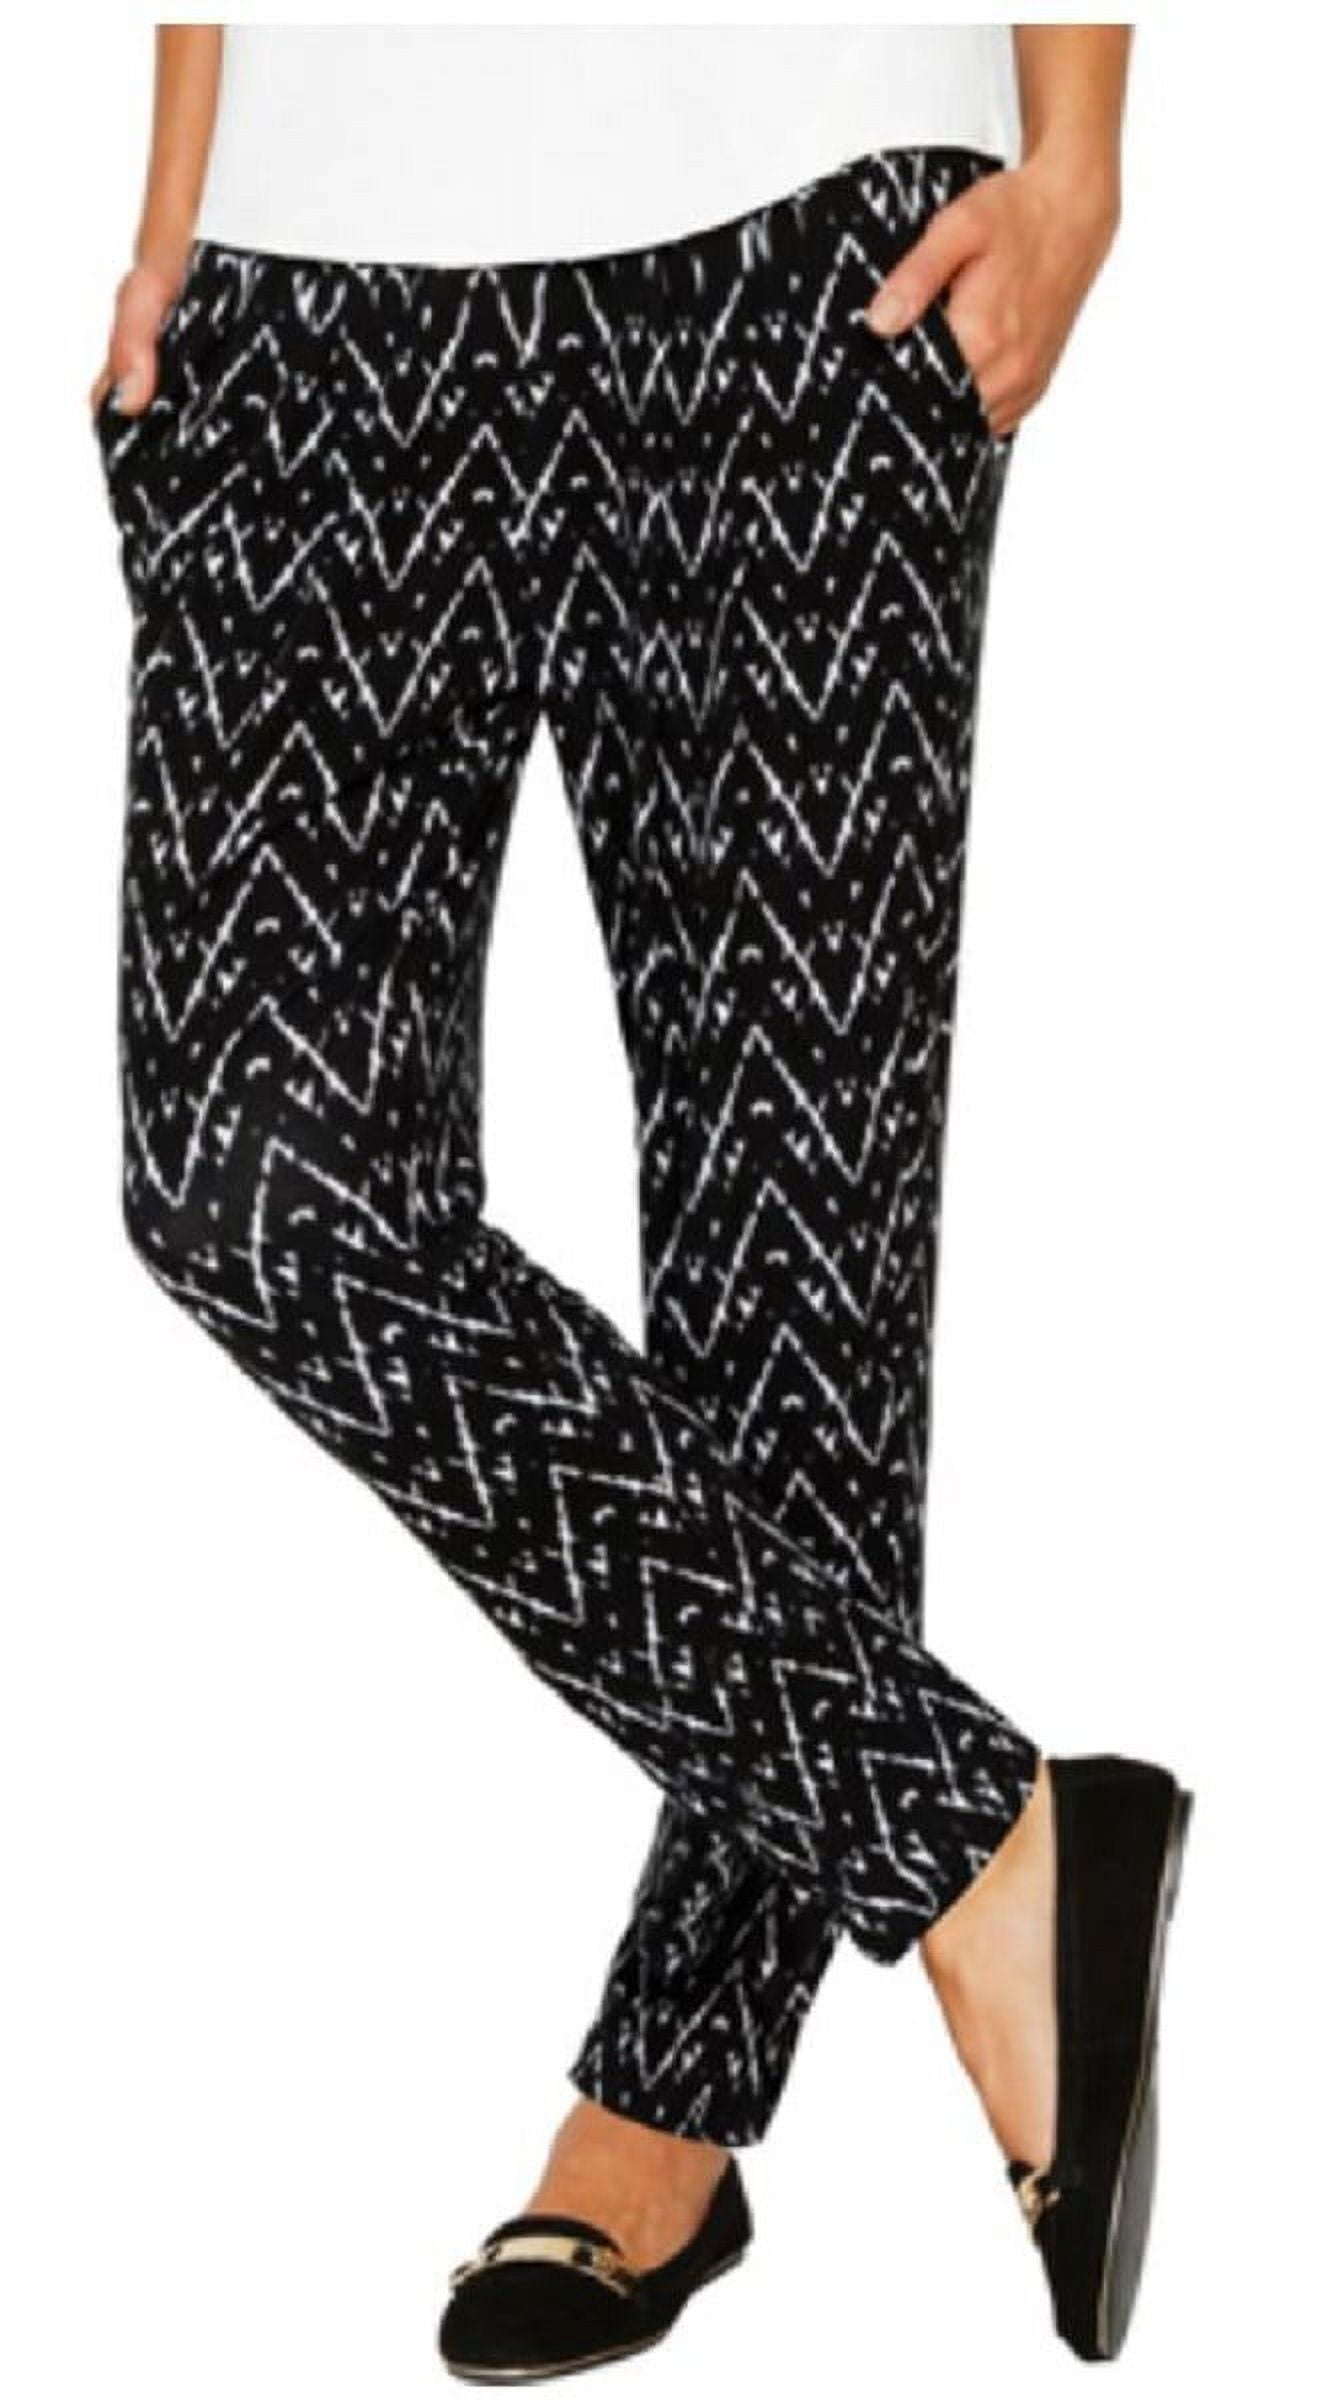 Matty M Women's Fashion Stretch Soft Pull-On Pant (Black Chevron, X-Small)  